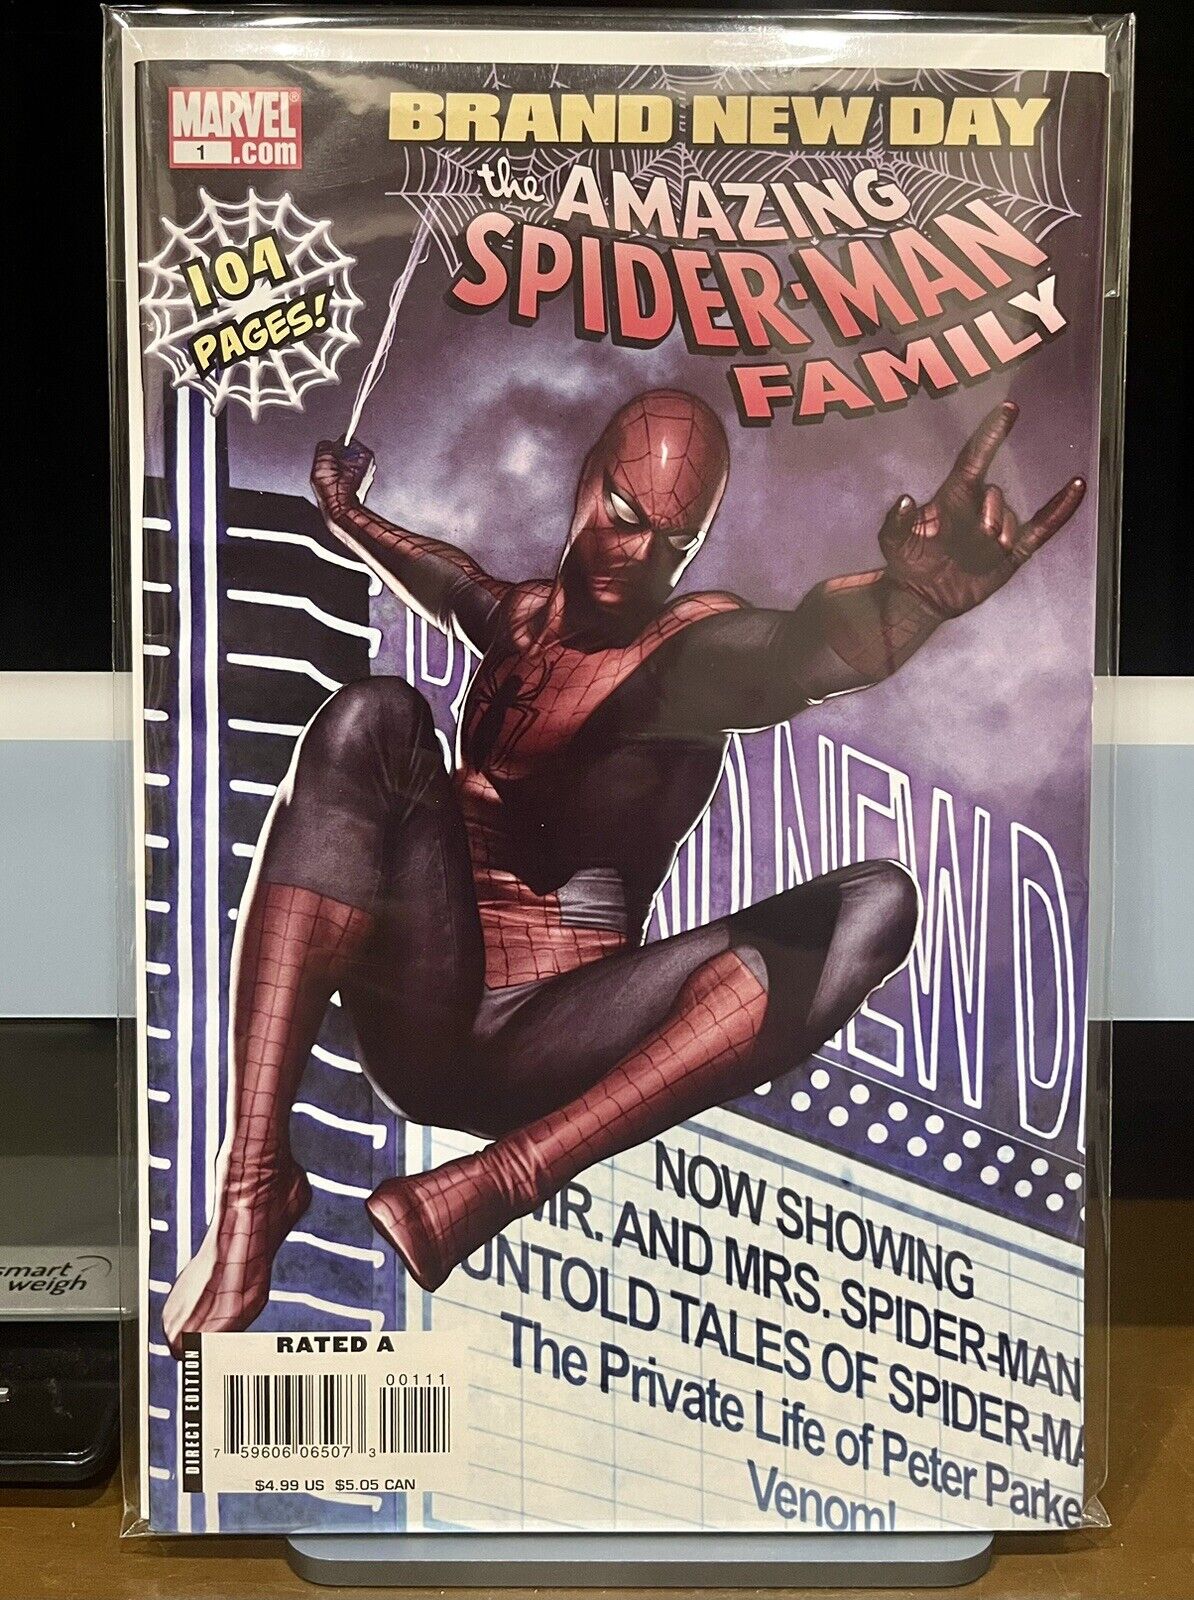 AMAZING SPIDER-MAN FAMILY #1 Brand New Day (Marvel Comics) VF/NM